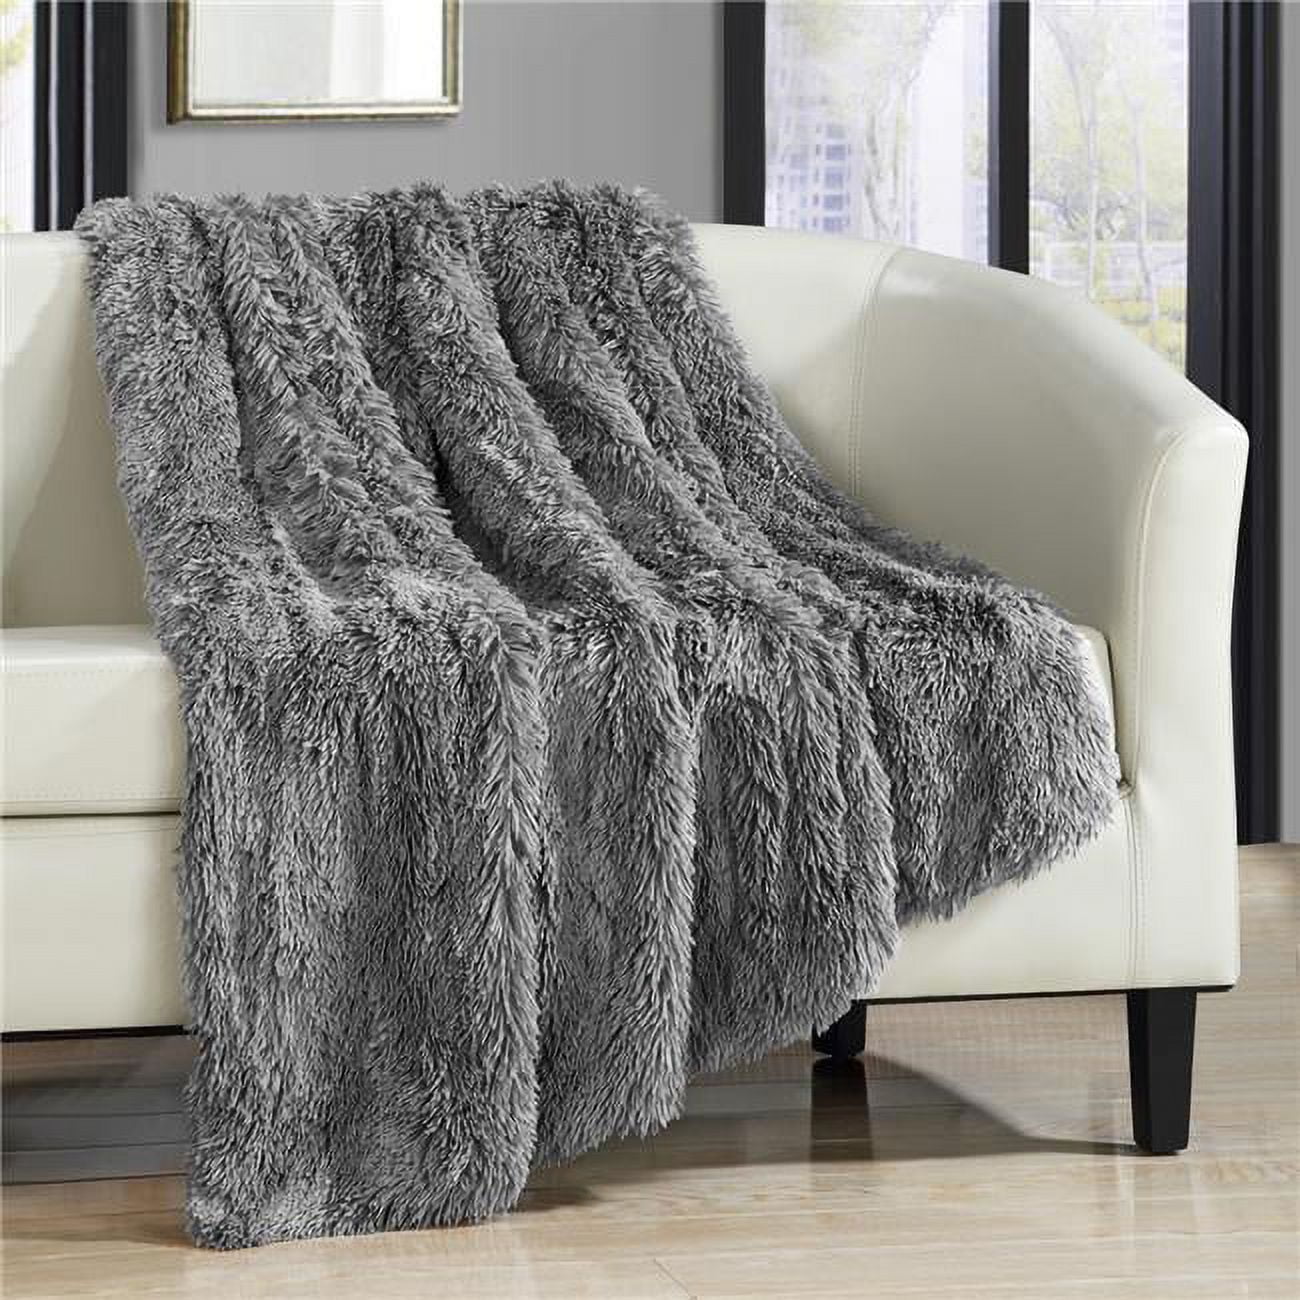 50 X 60 In. Anchorage Throw Blanket Cozy Super Soft Ultra Plush Decorative Shaggy, Silver